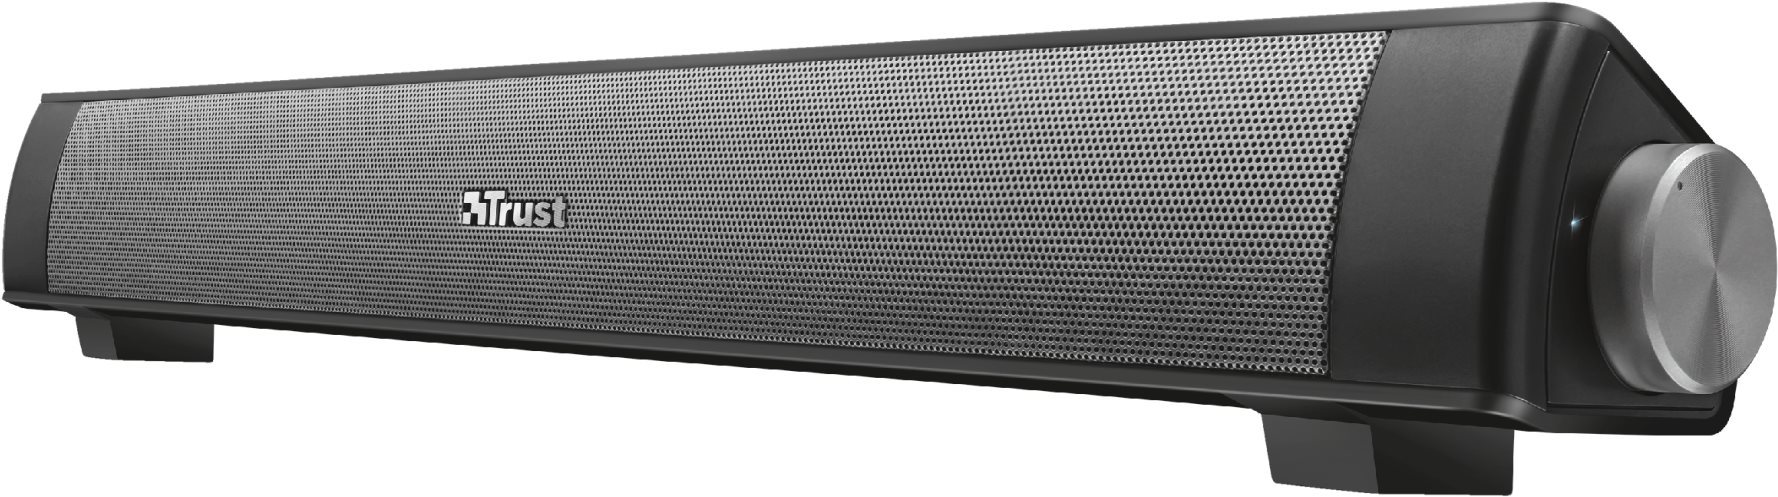 Sound Bar Trust Lino Bluetooth Wireless Soundbar Speaker Lateral view